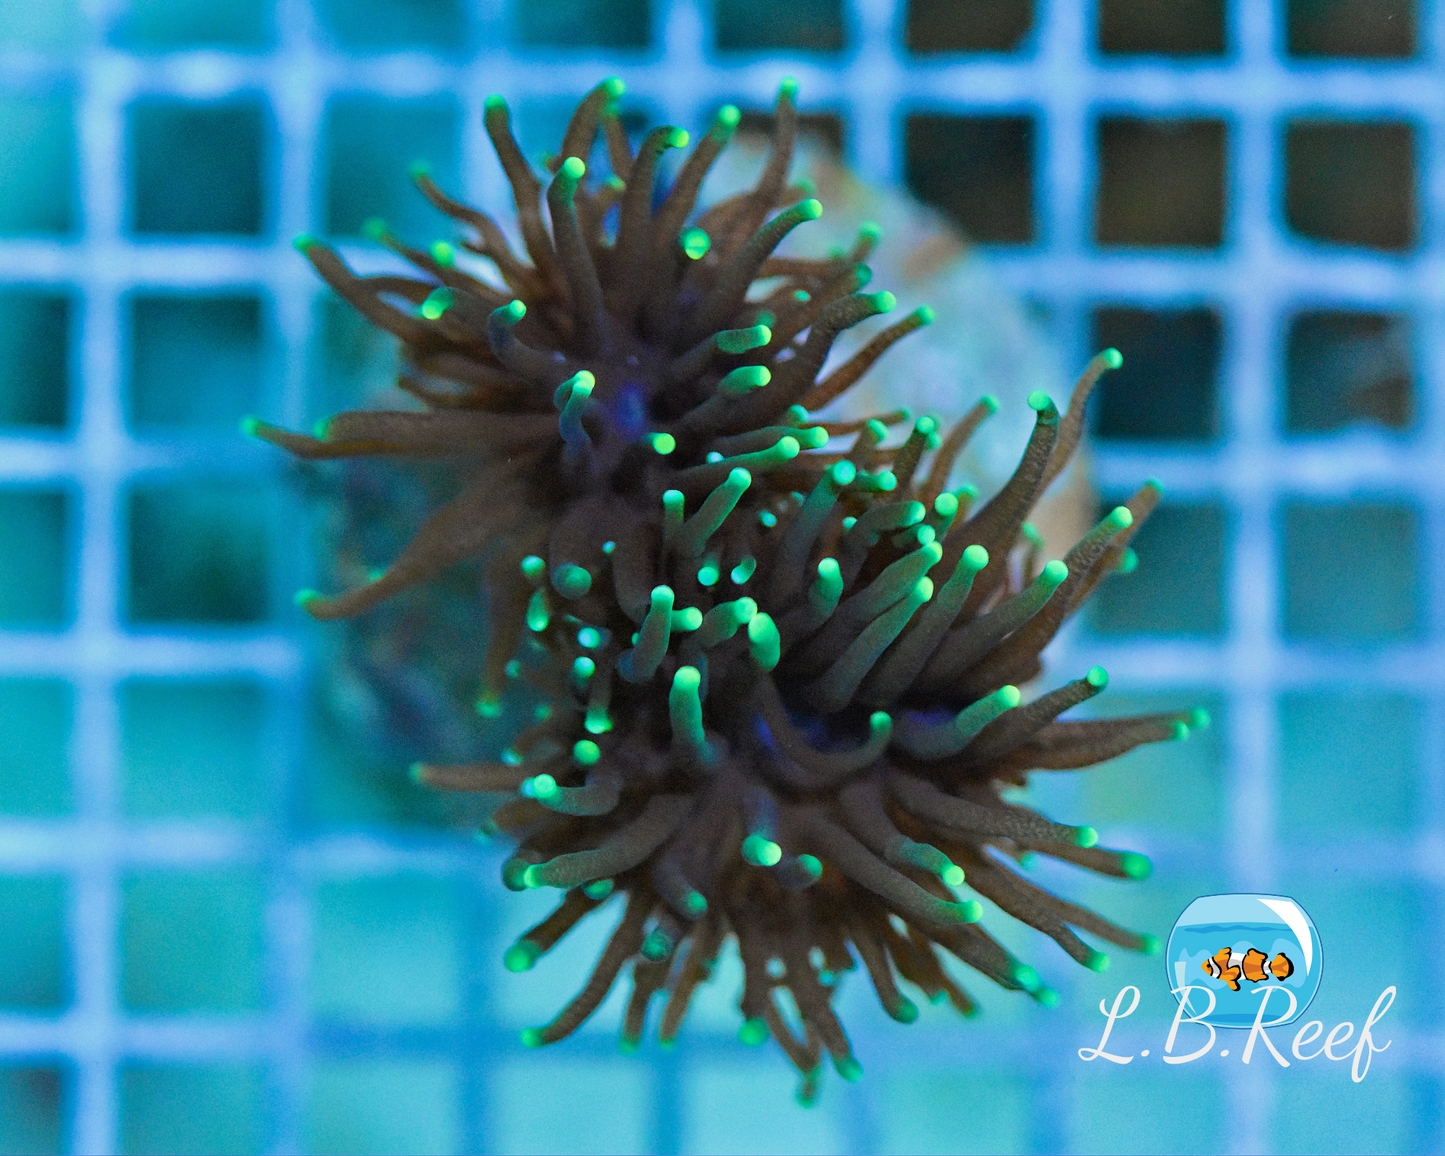 Euphyllia glabrescens "Green Tips" - L.B.Reef